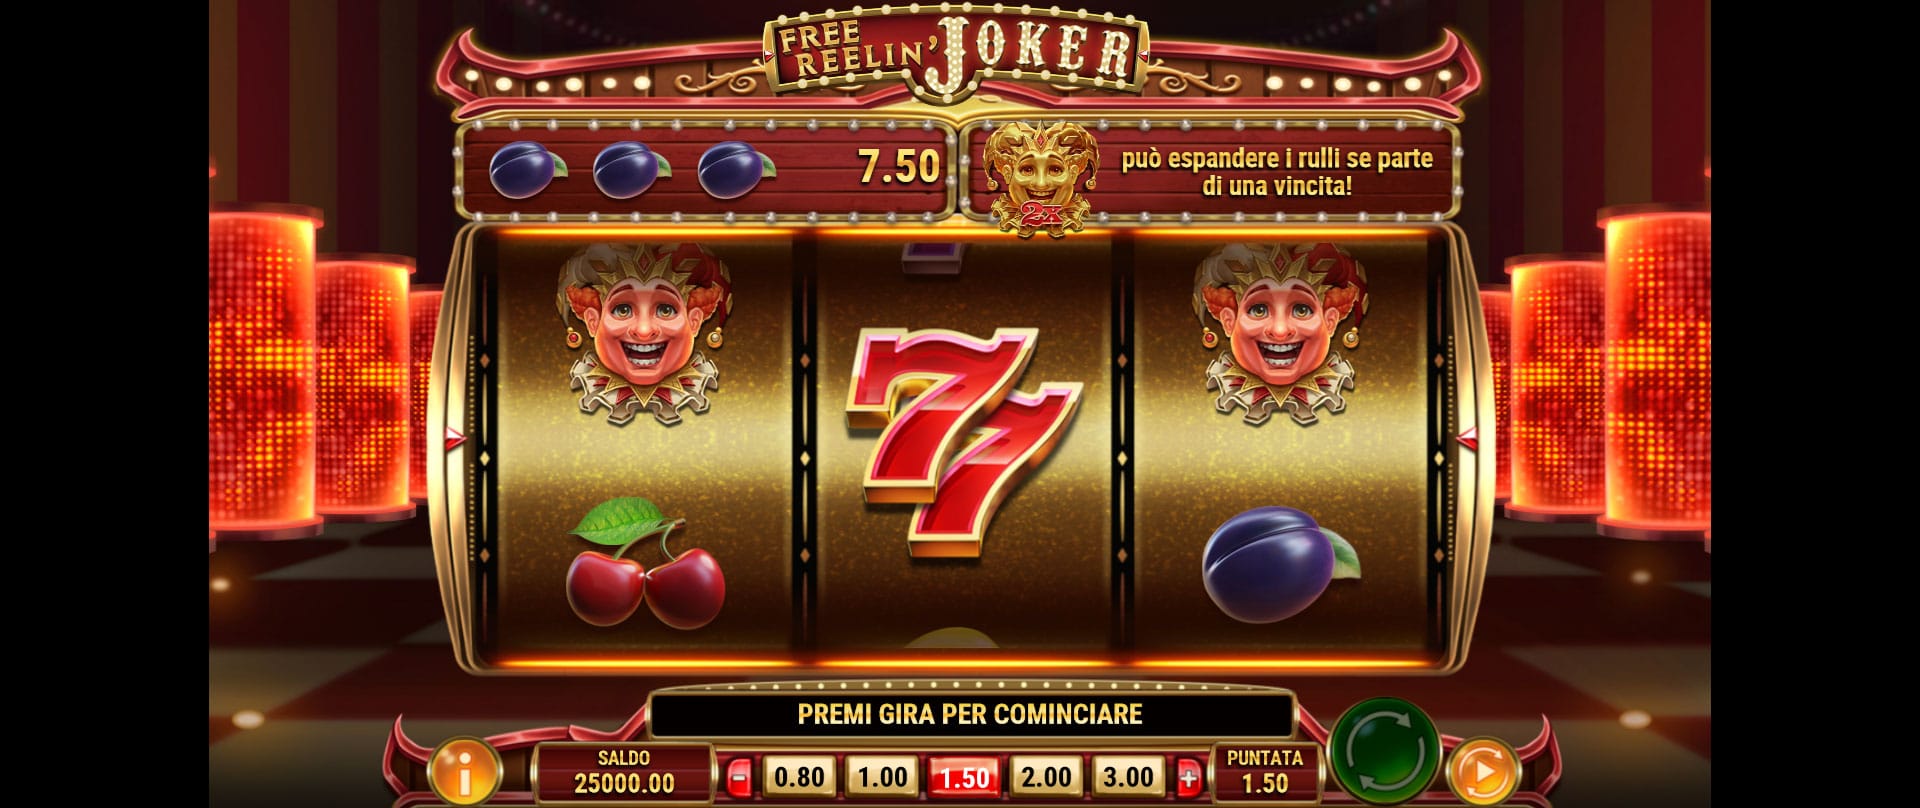 schermata slot machine free reelin joker